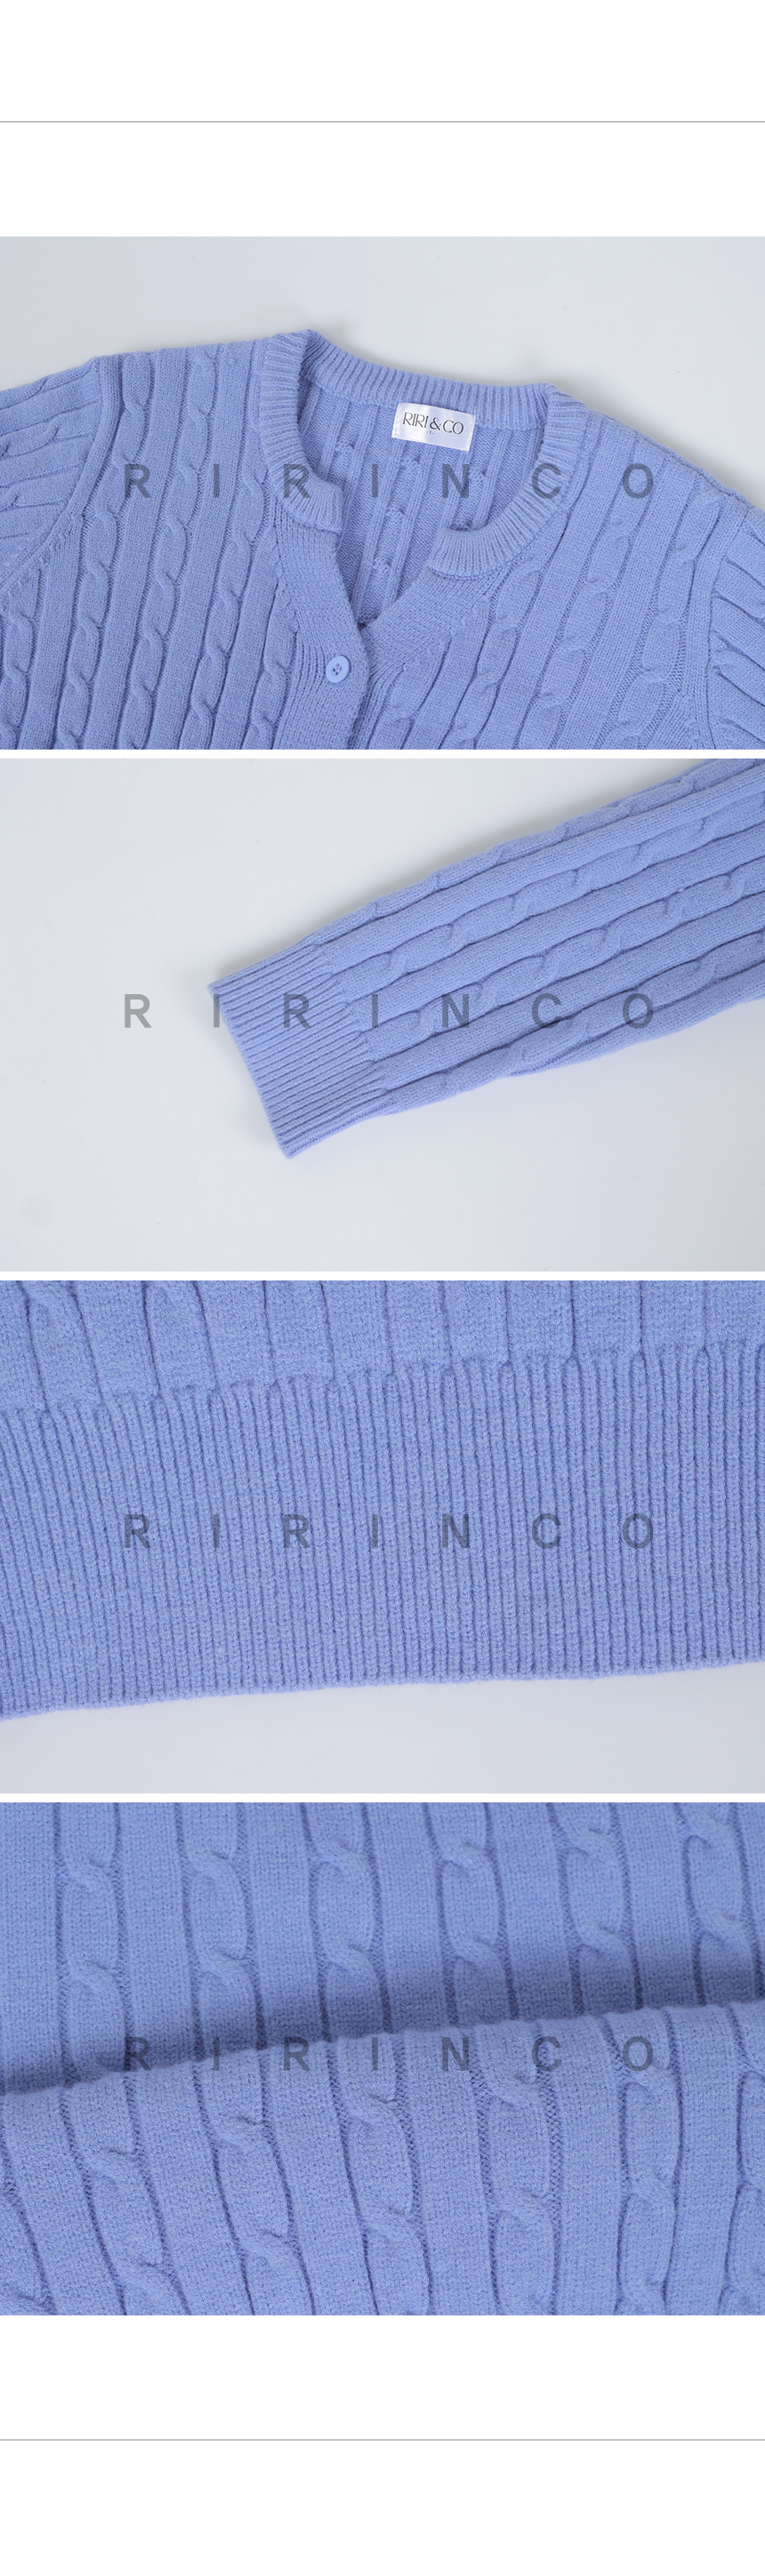 RIRINCO ウールⅤネックケーブル編みセミクロップド丈カーディガン